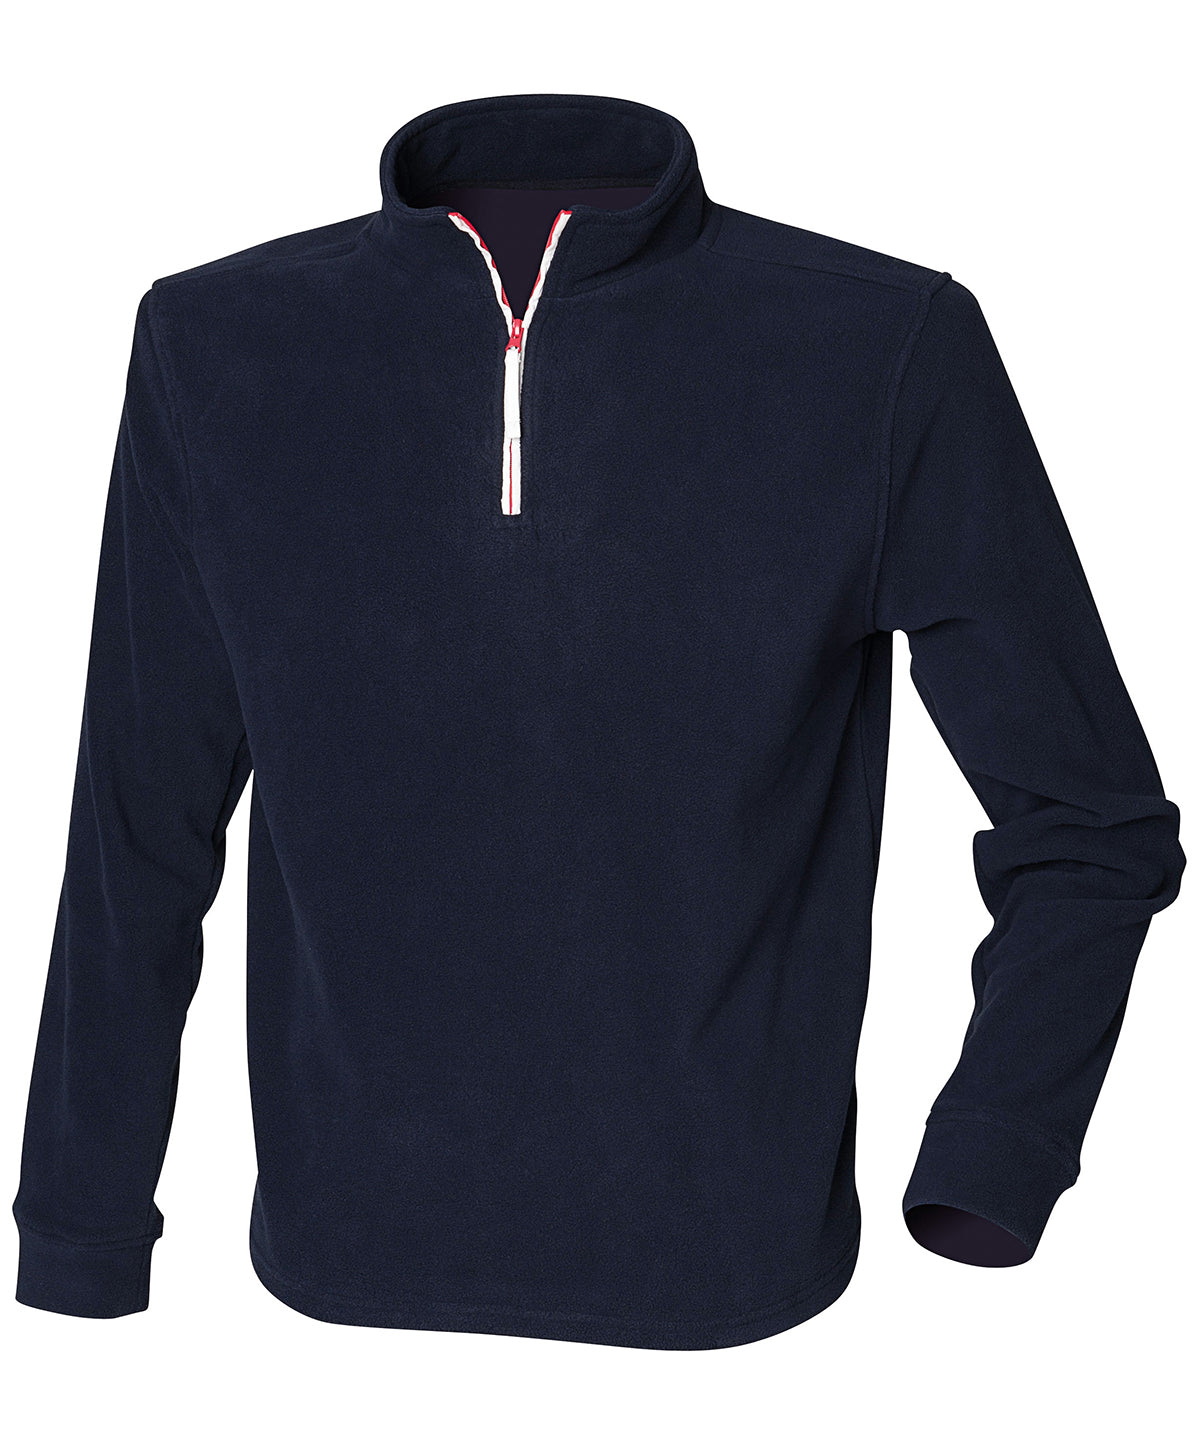 Personalised Sweatshirts - Black Finden & Hales ¼ zip long sleeve fleece piped